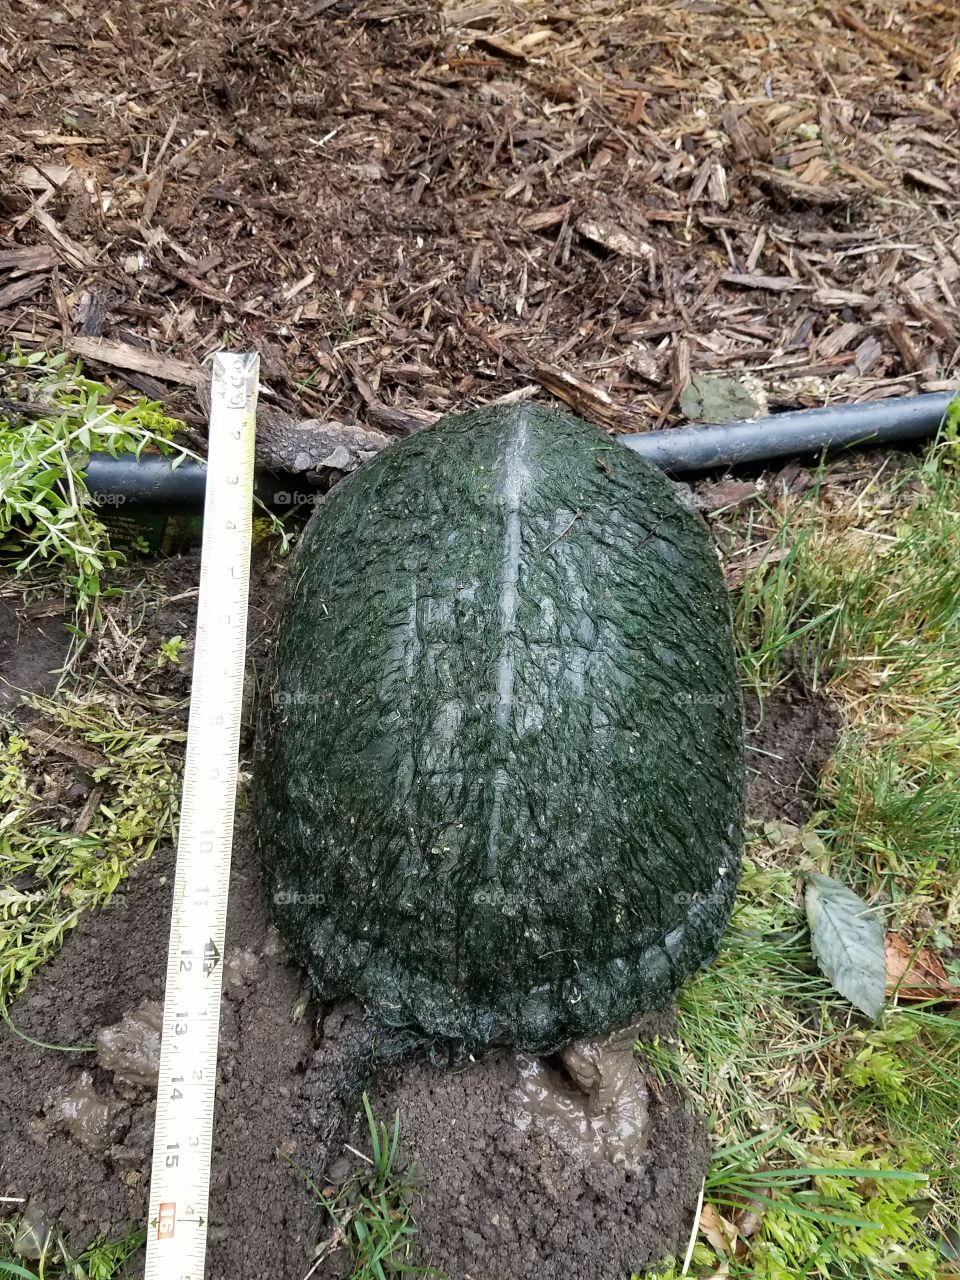 Turtle Measurements